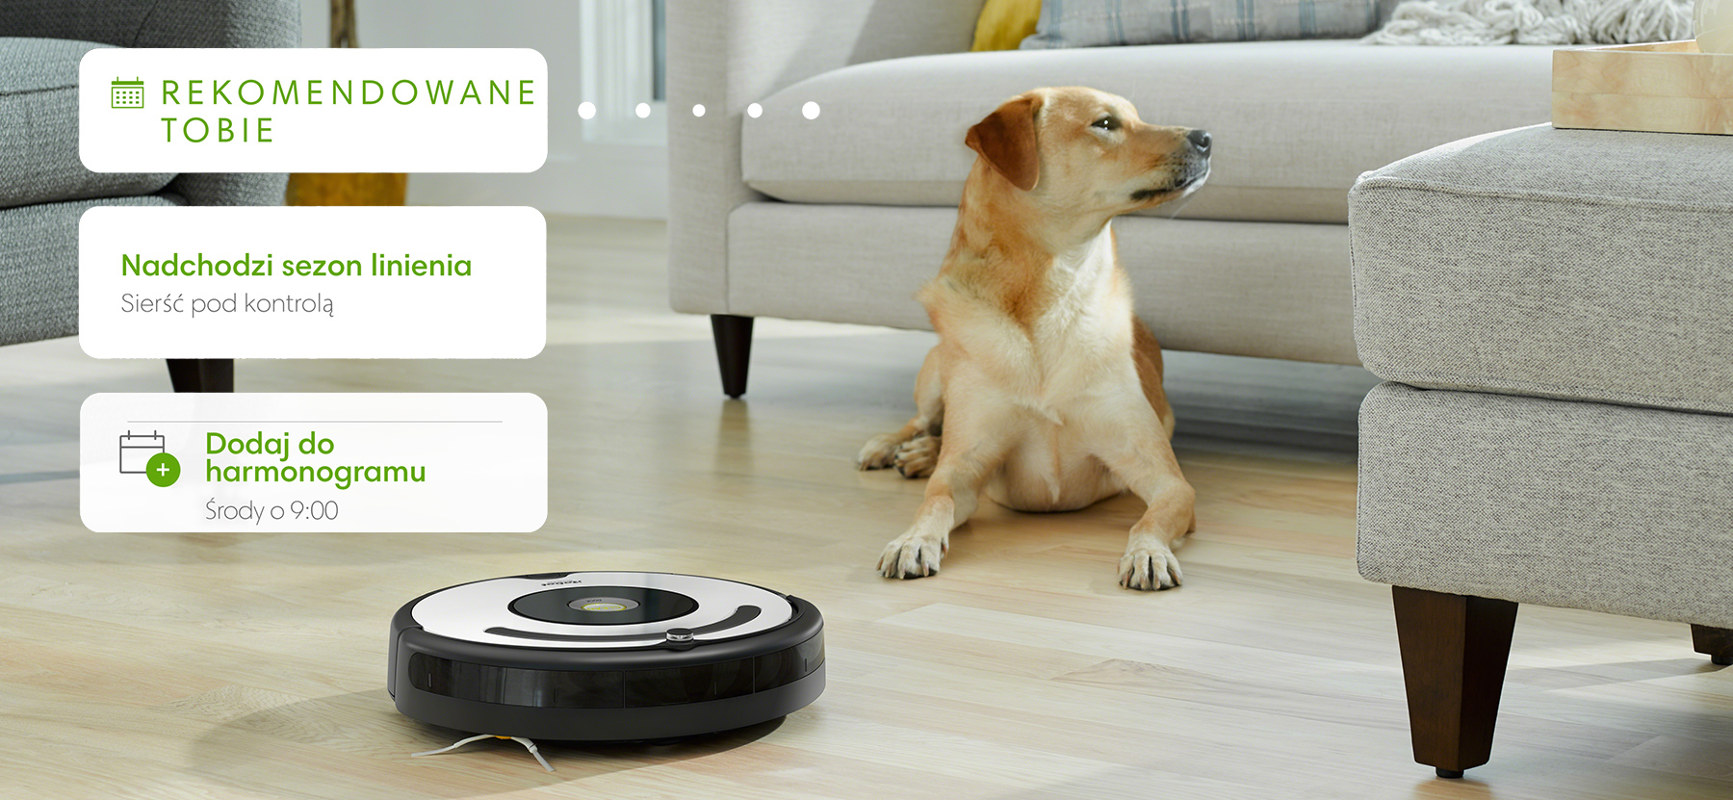 iRobot Roomba serii 600 personalizowane sugestie sprzątania